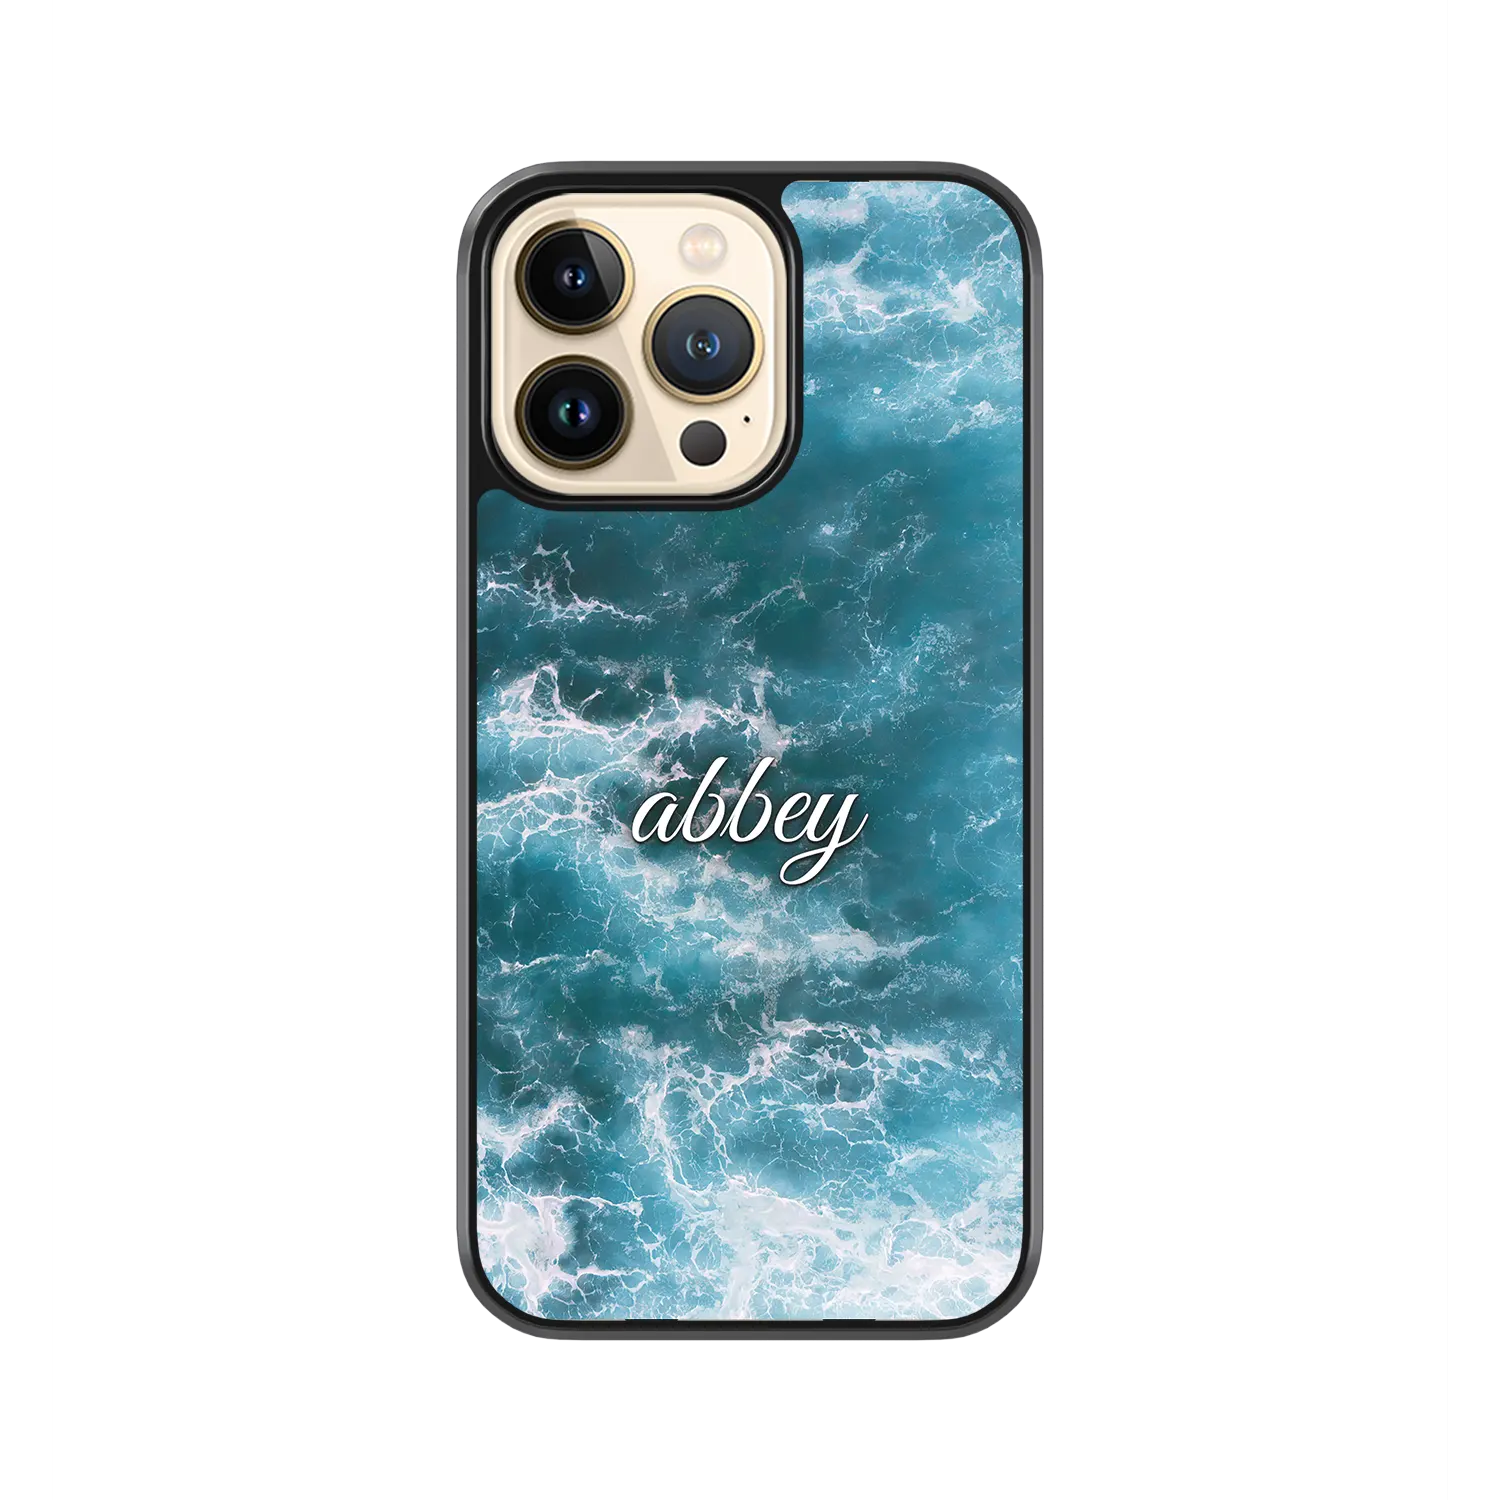 Ocean Blue iphone 11 pro Max cover